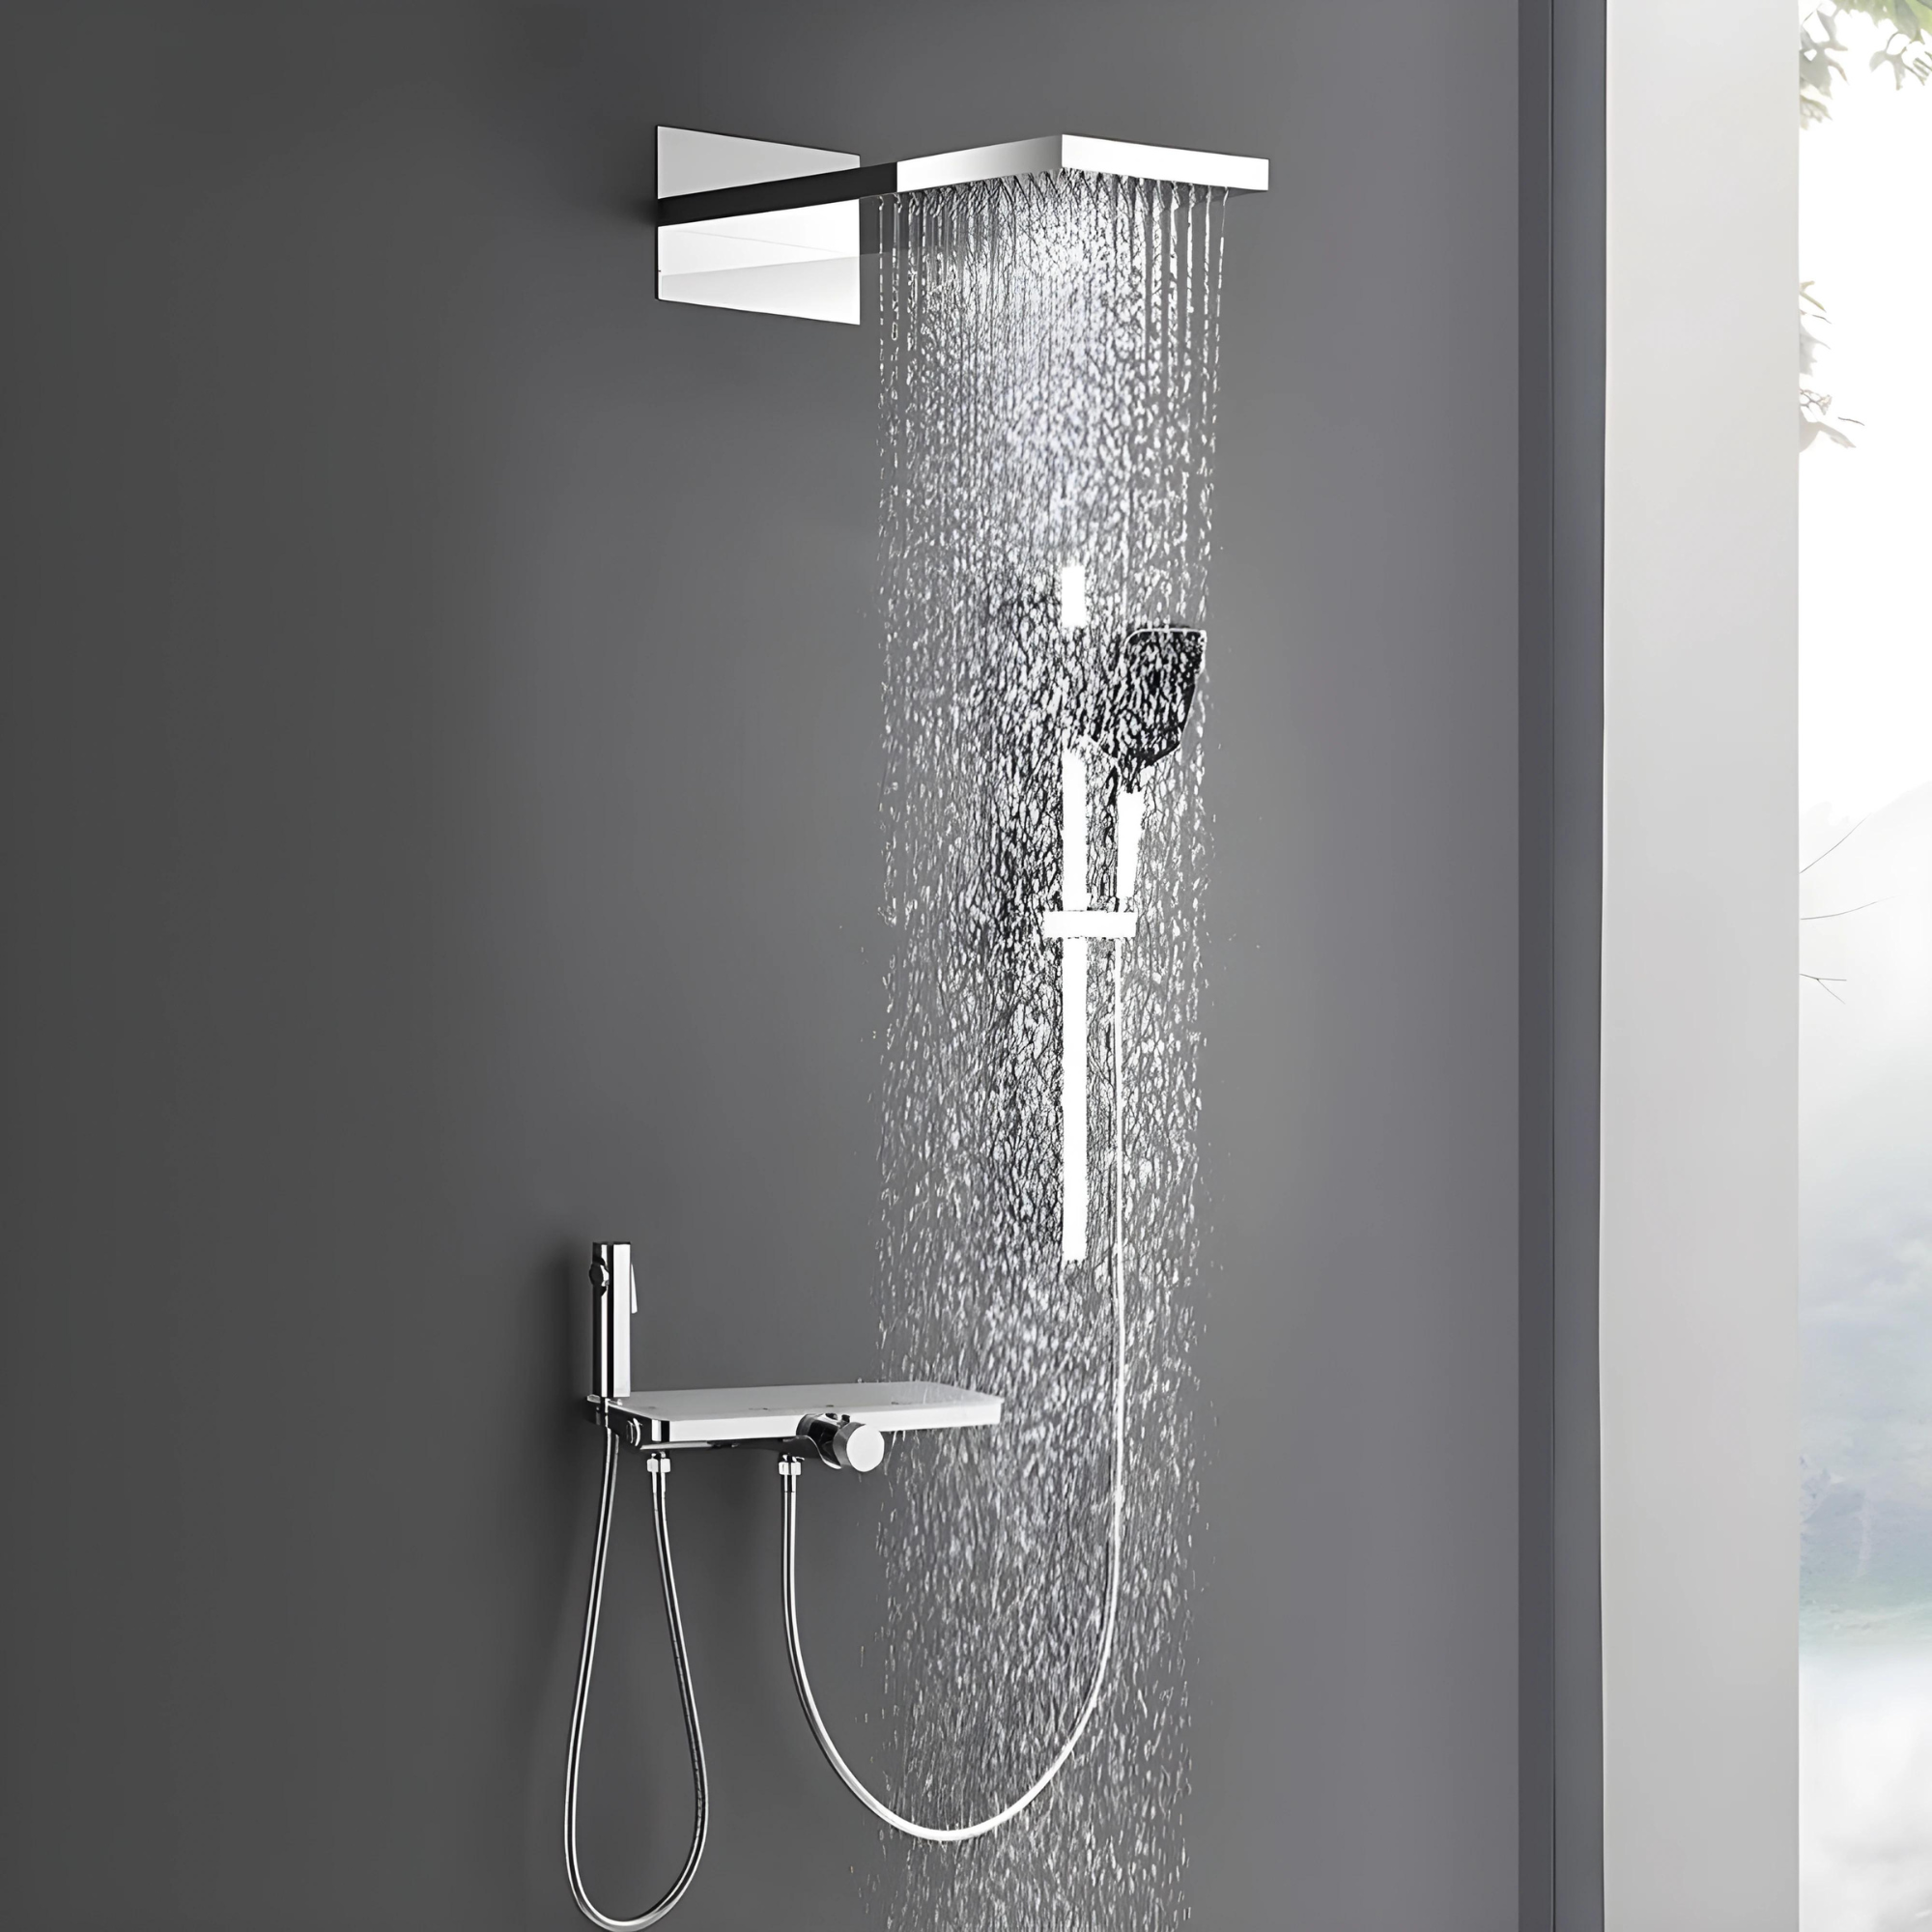 ZUECO / Sistema doccia e bidet in ottone